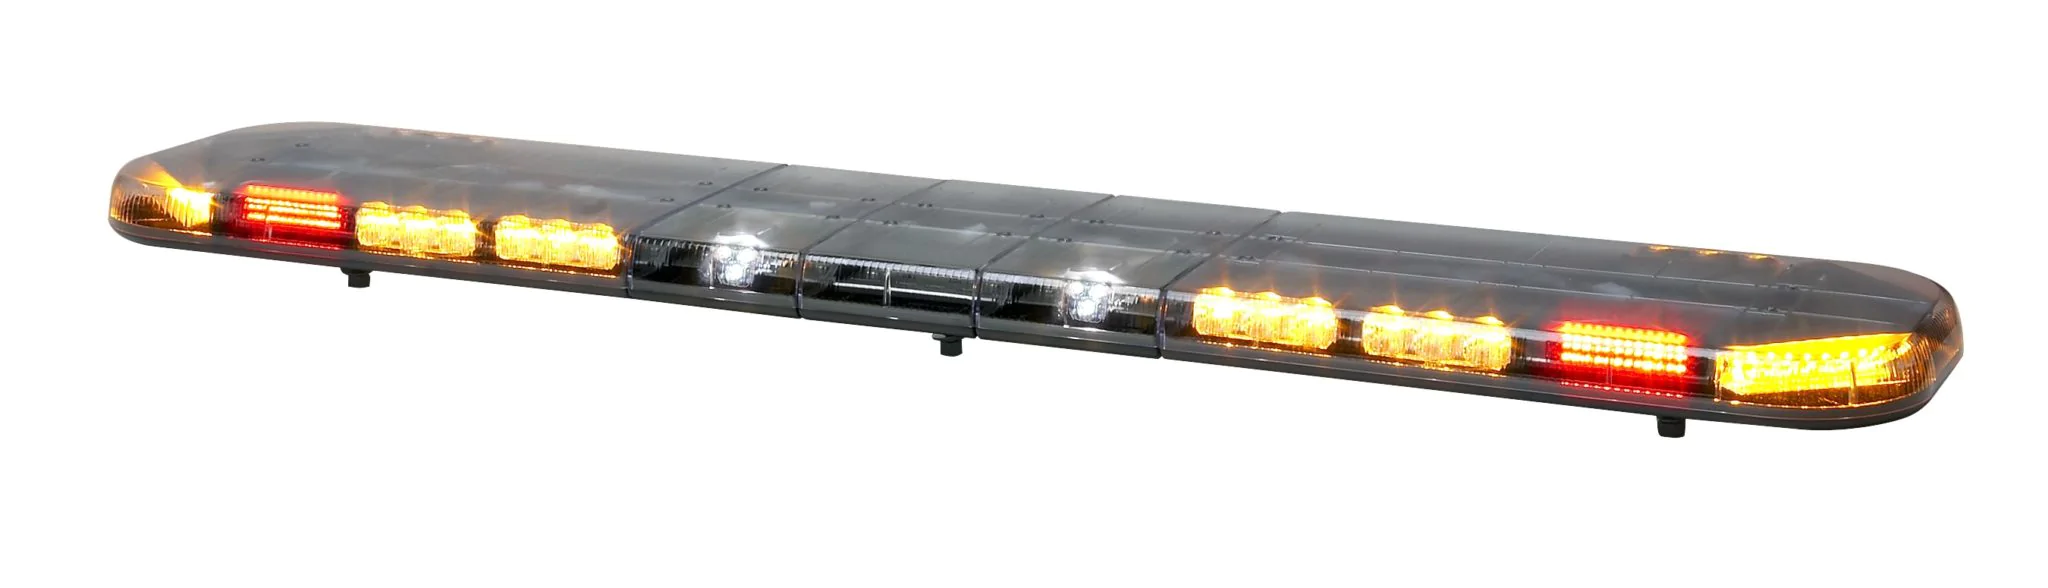 Whelen Towman's   Justice Series Linear-LED Lightbar